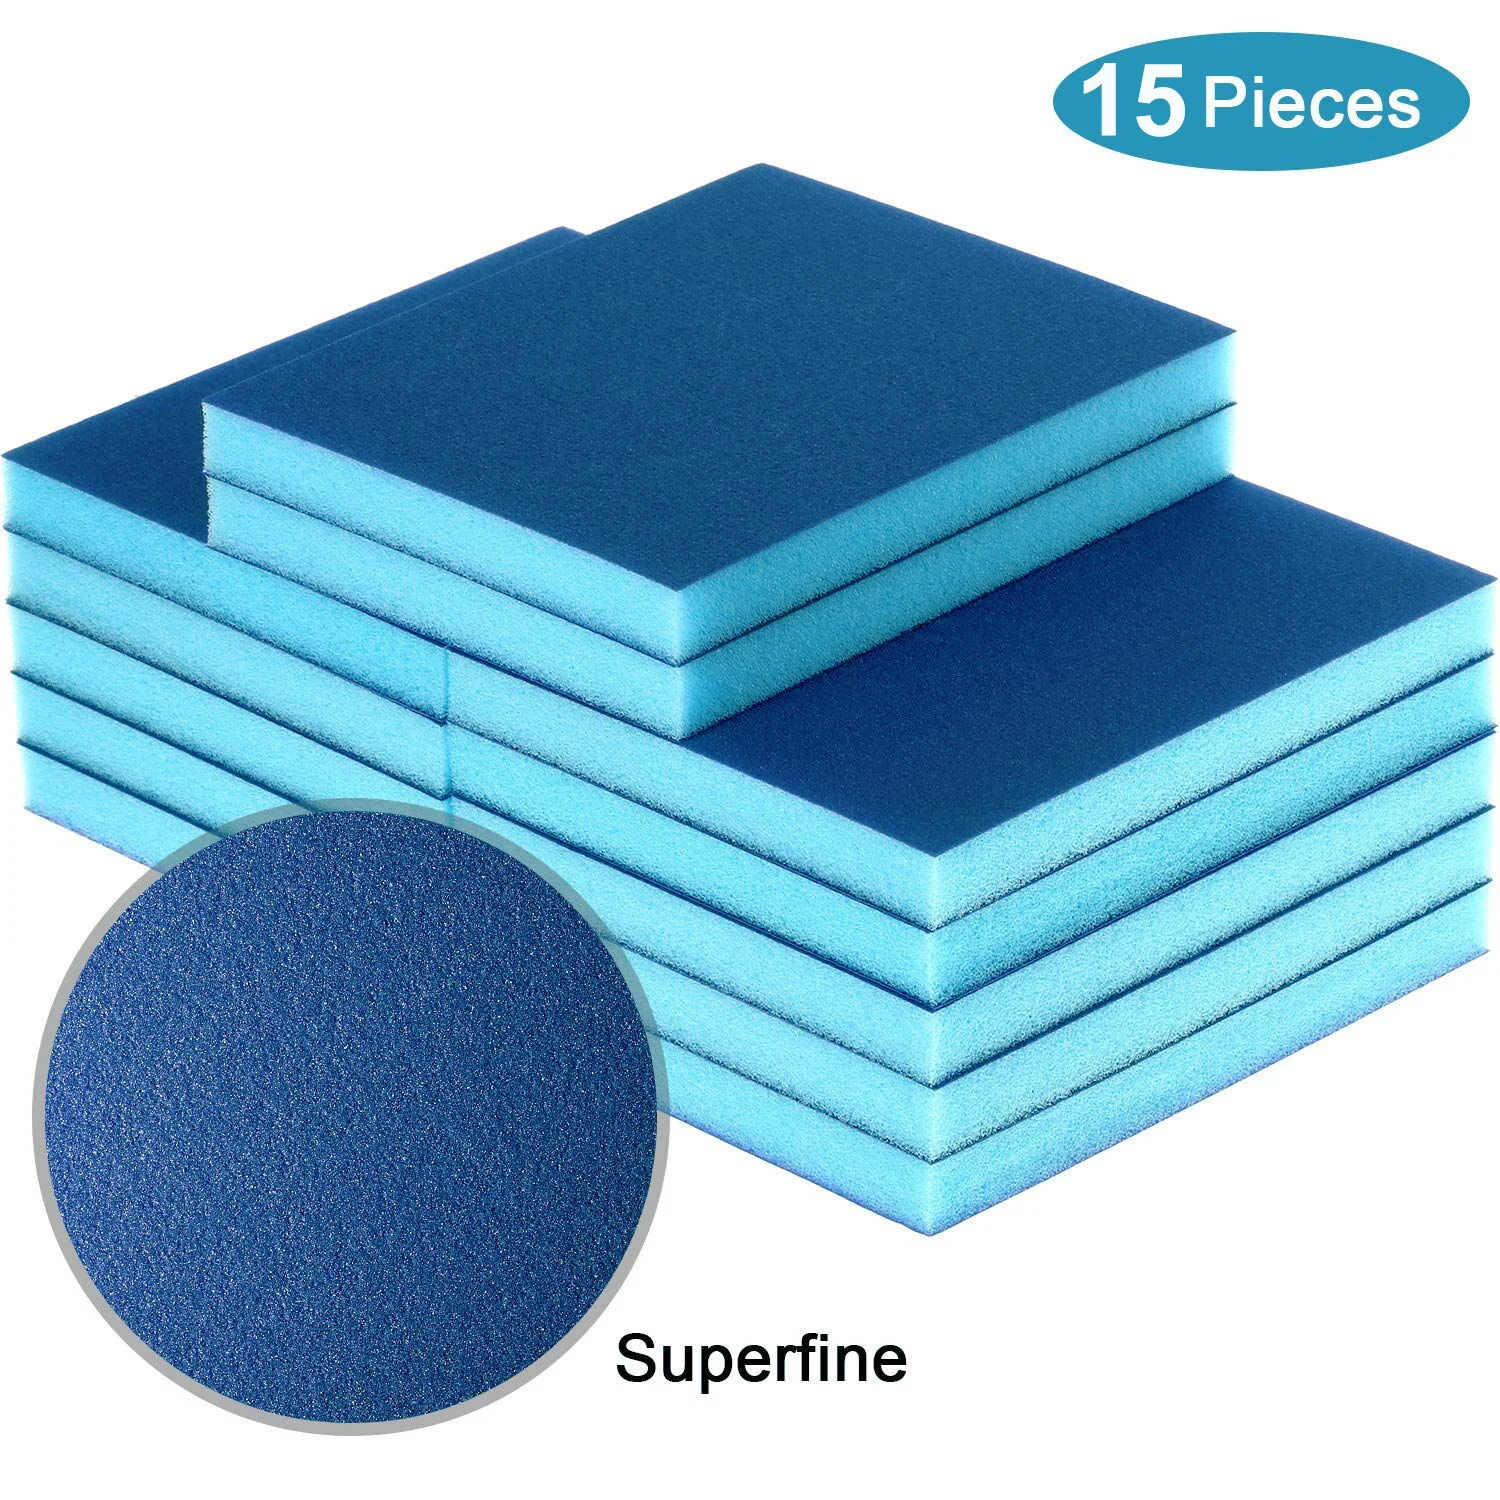 100-240grit Polishing Sanding Sponge Block Pad Sandpaper Assorted Abrasive Tool Random Color 120*100*12mm